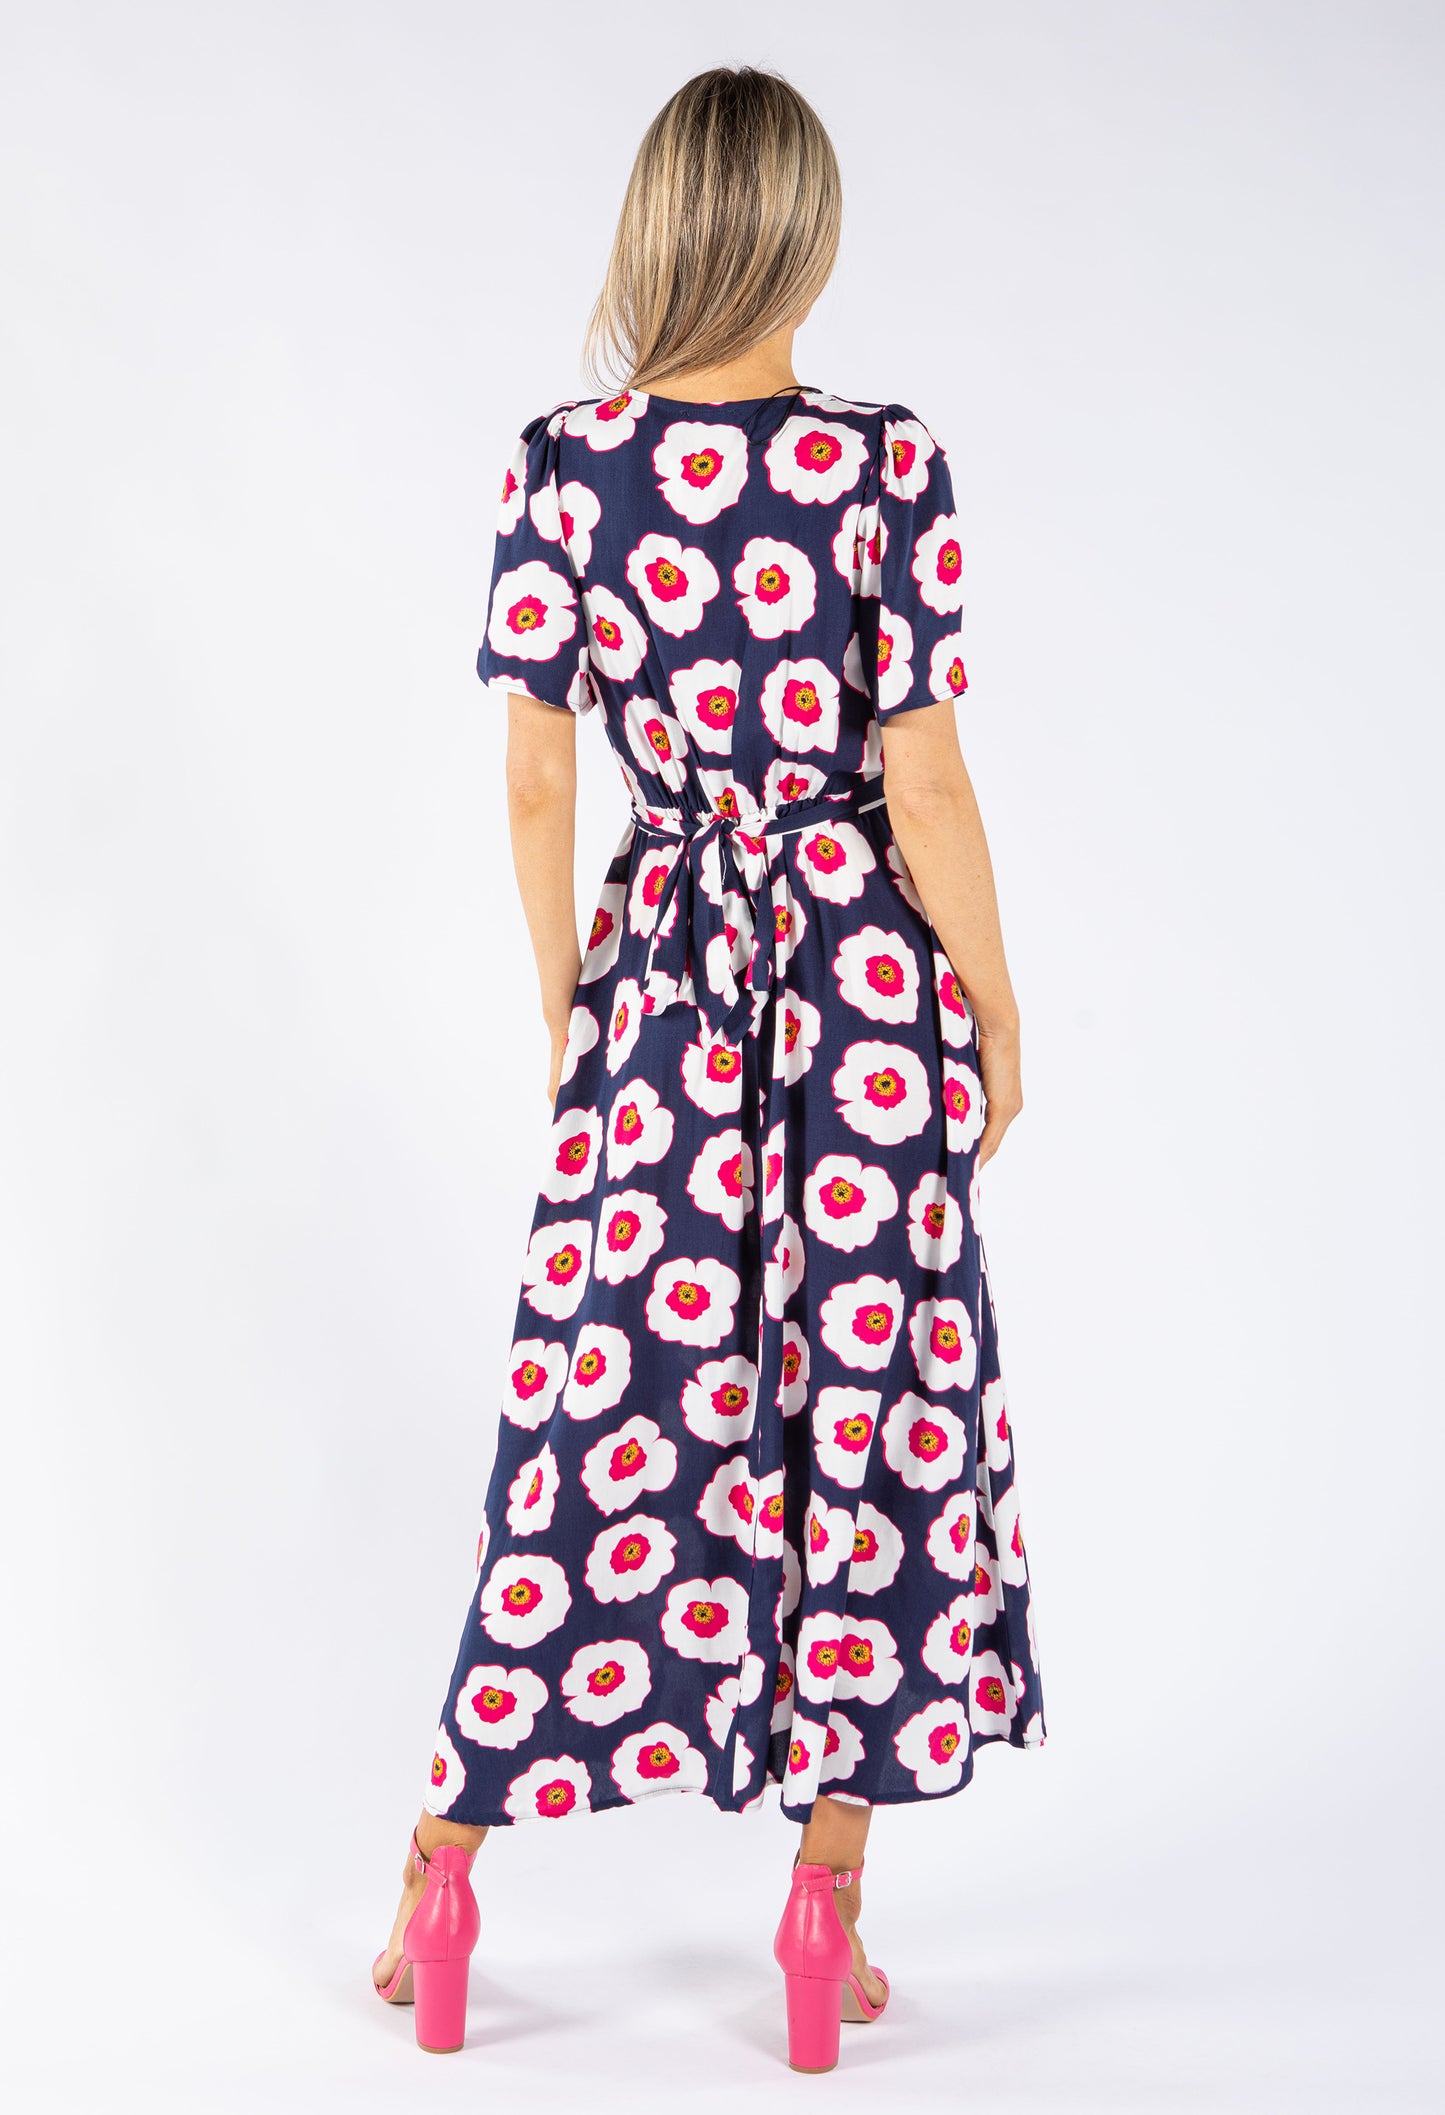 Poppy Print Dress